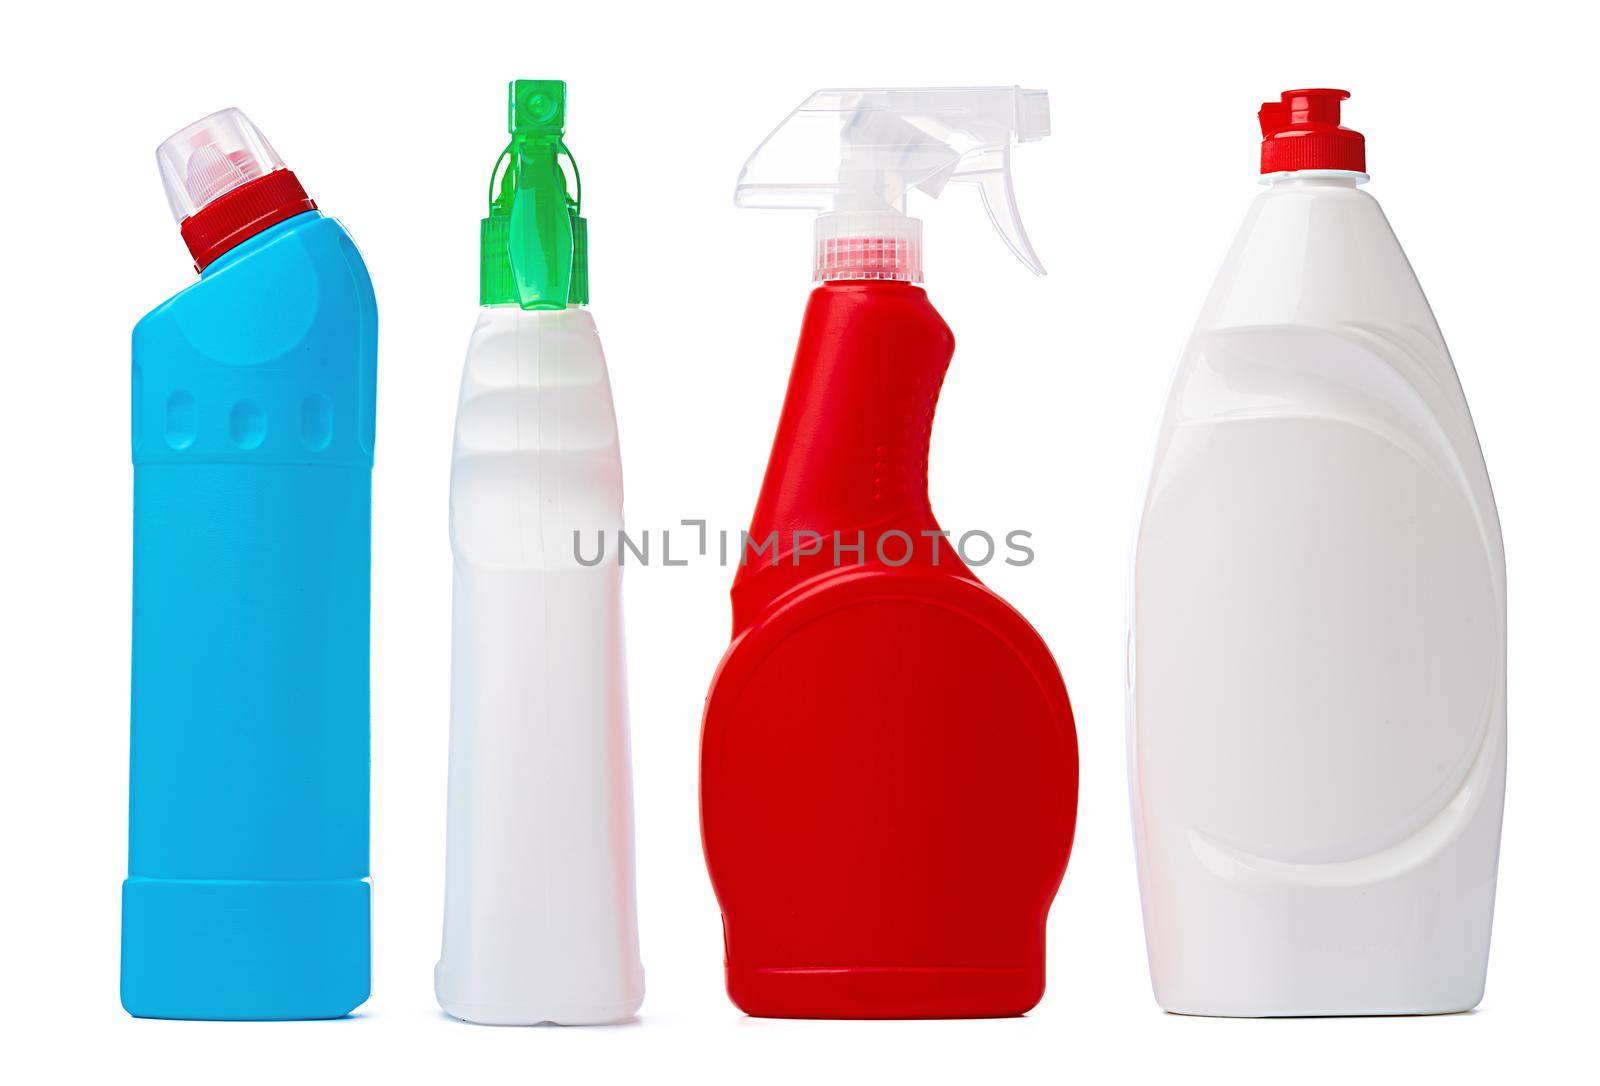 Plastic liquid detergent container on white background by Fabrikasimf